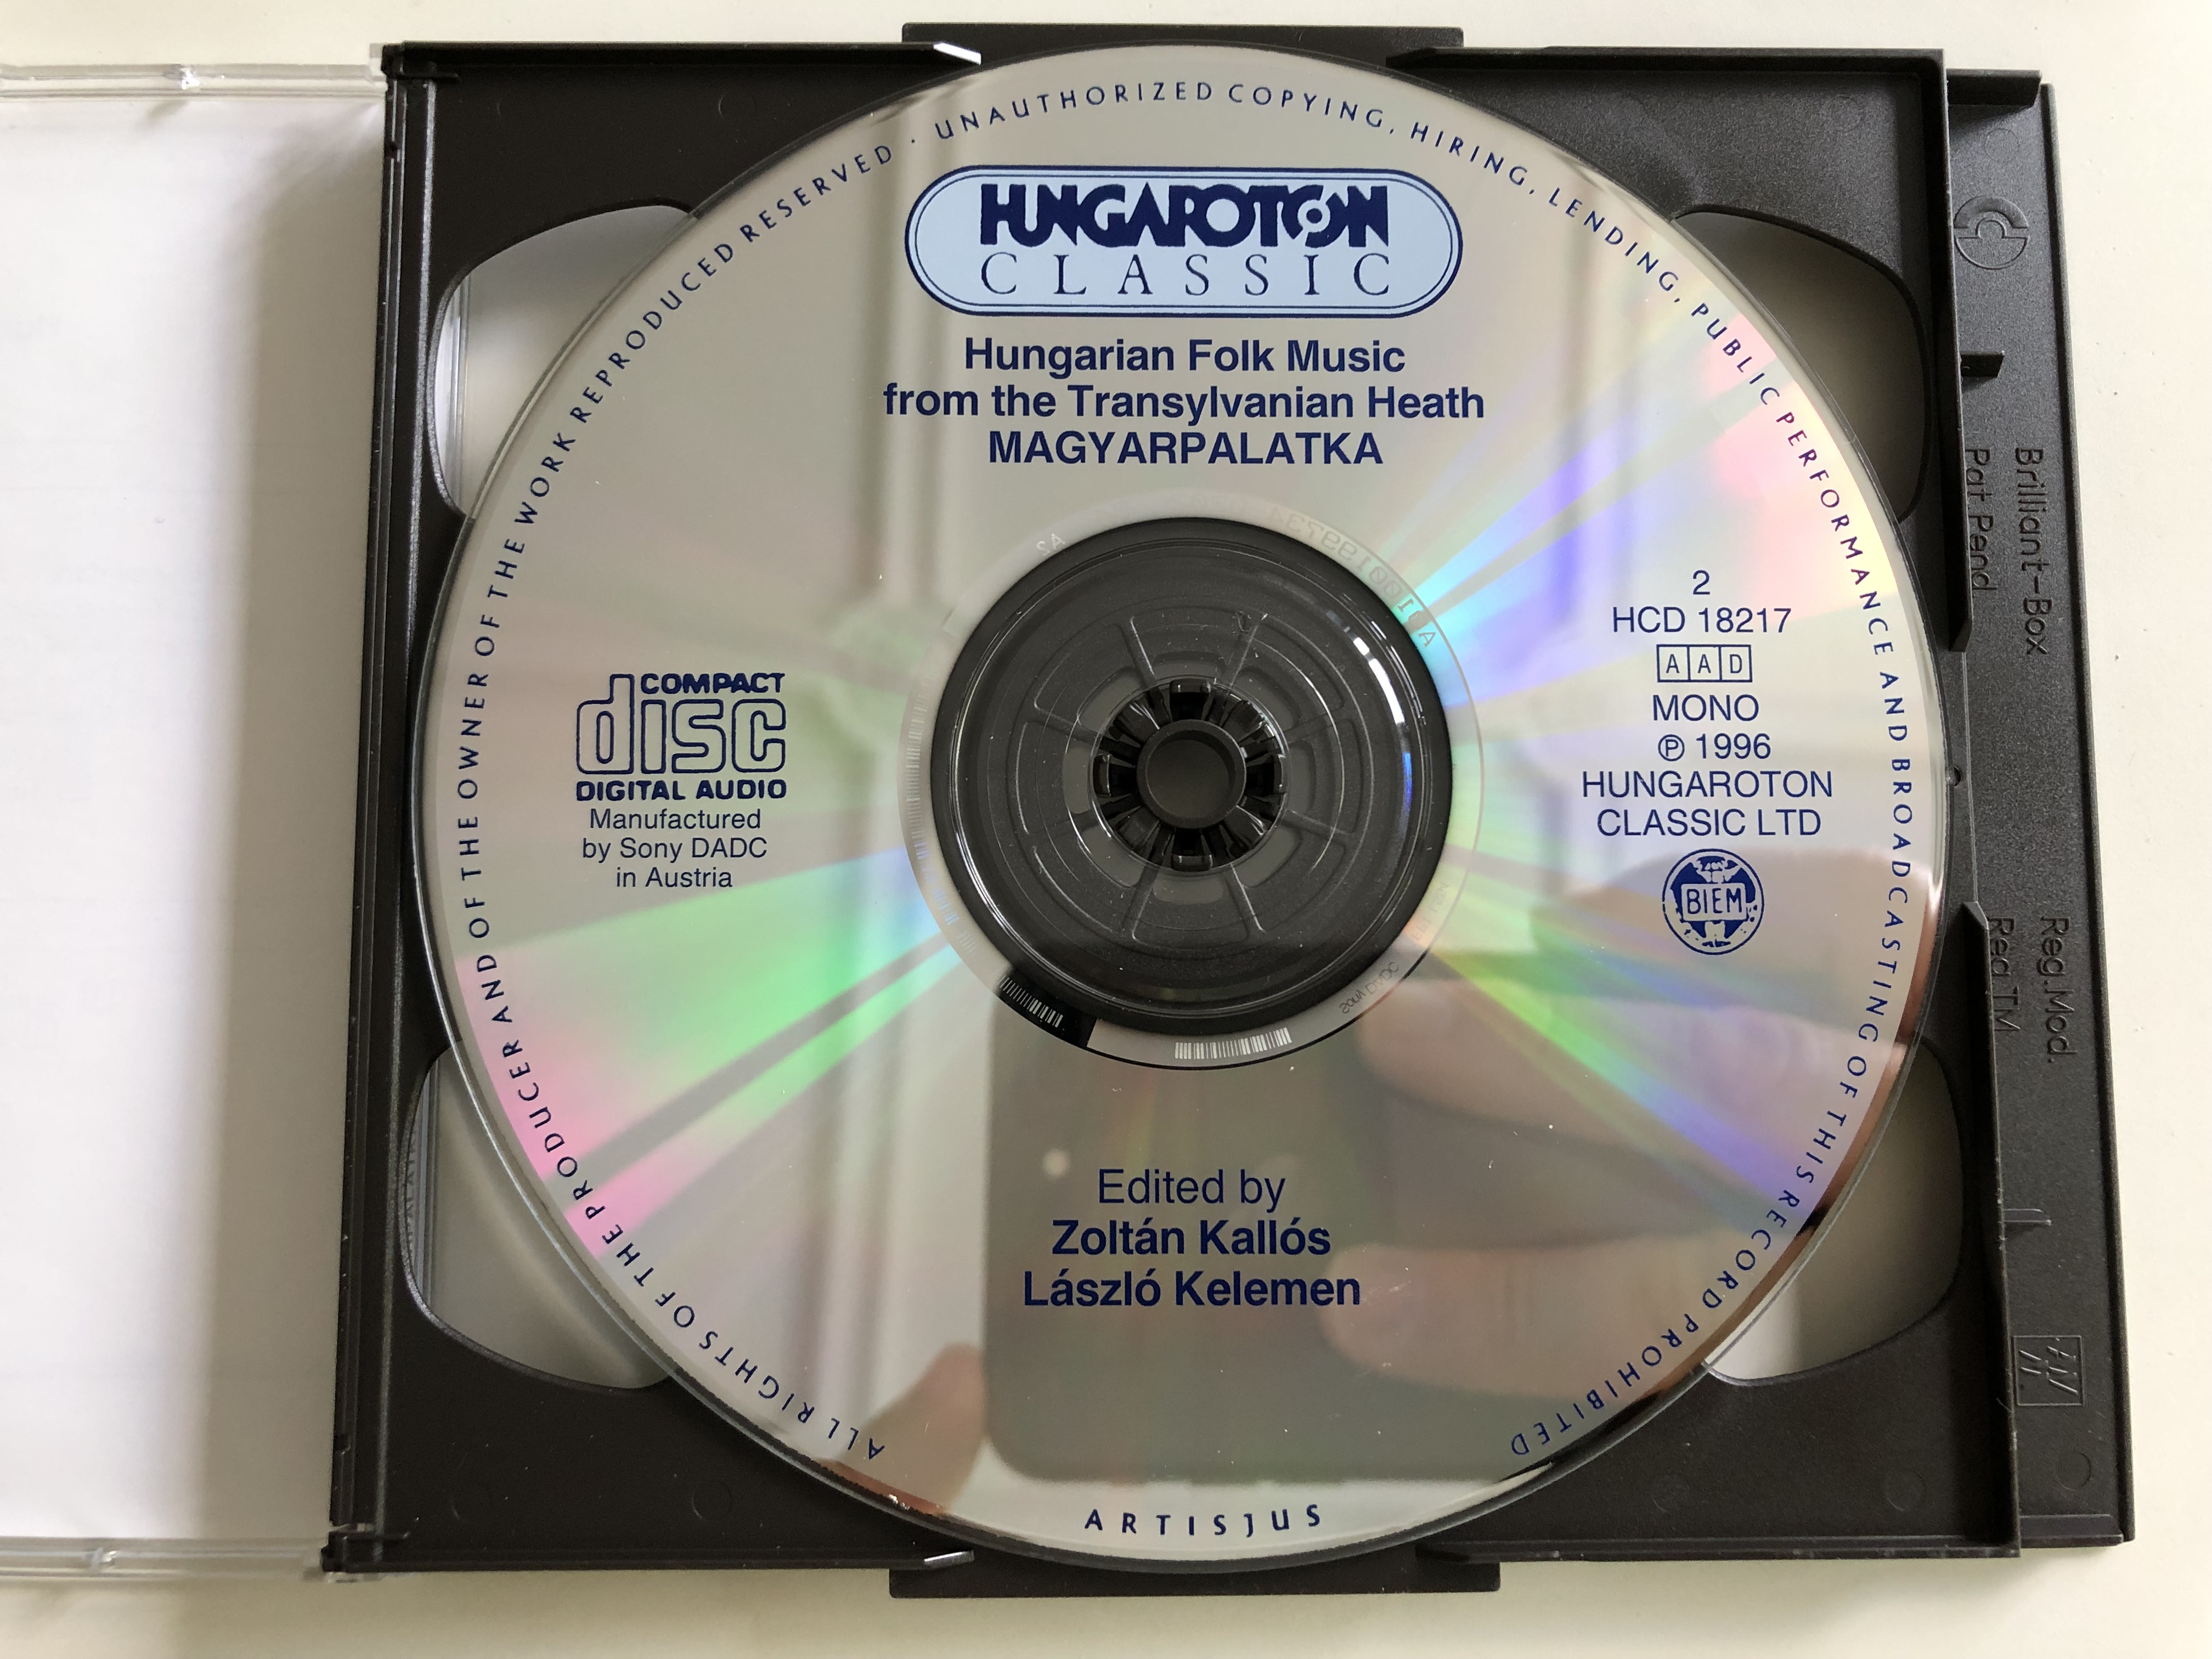 hungarian-folk-music-from-the-transylvanian-heath-magyarpalatka-hungaroton-2x-audio-cd-mono-1996-hcd-18216-17-9-.jpg